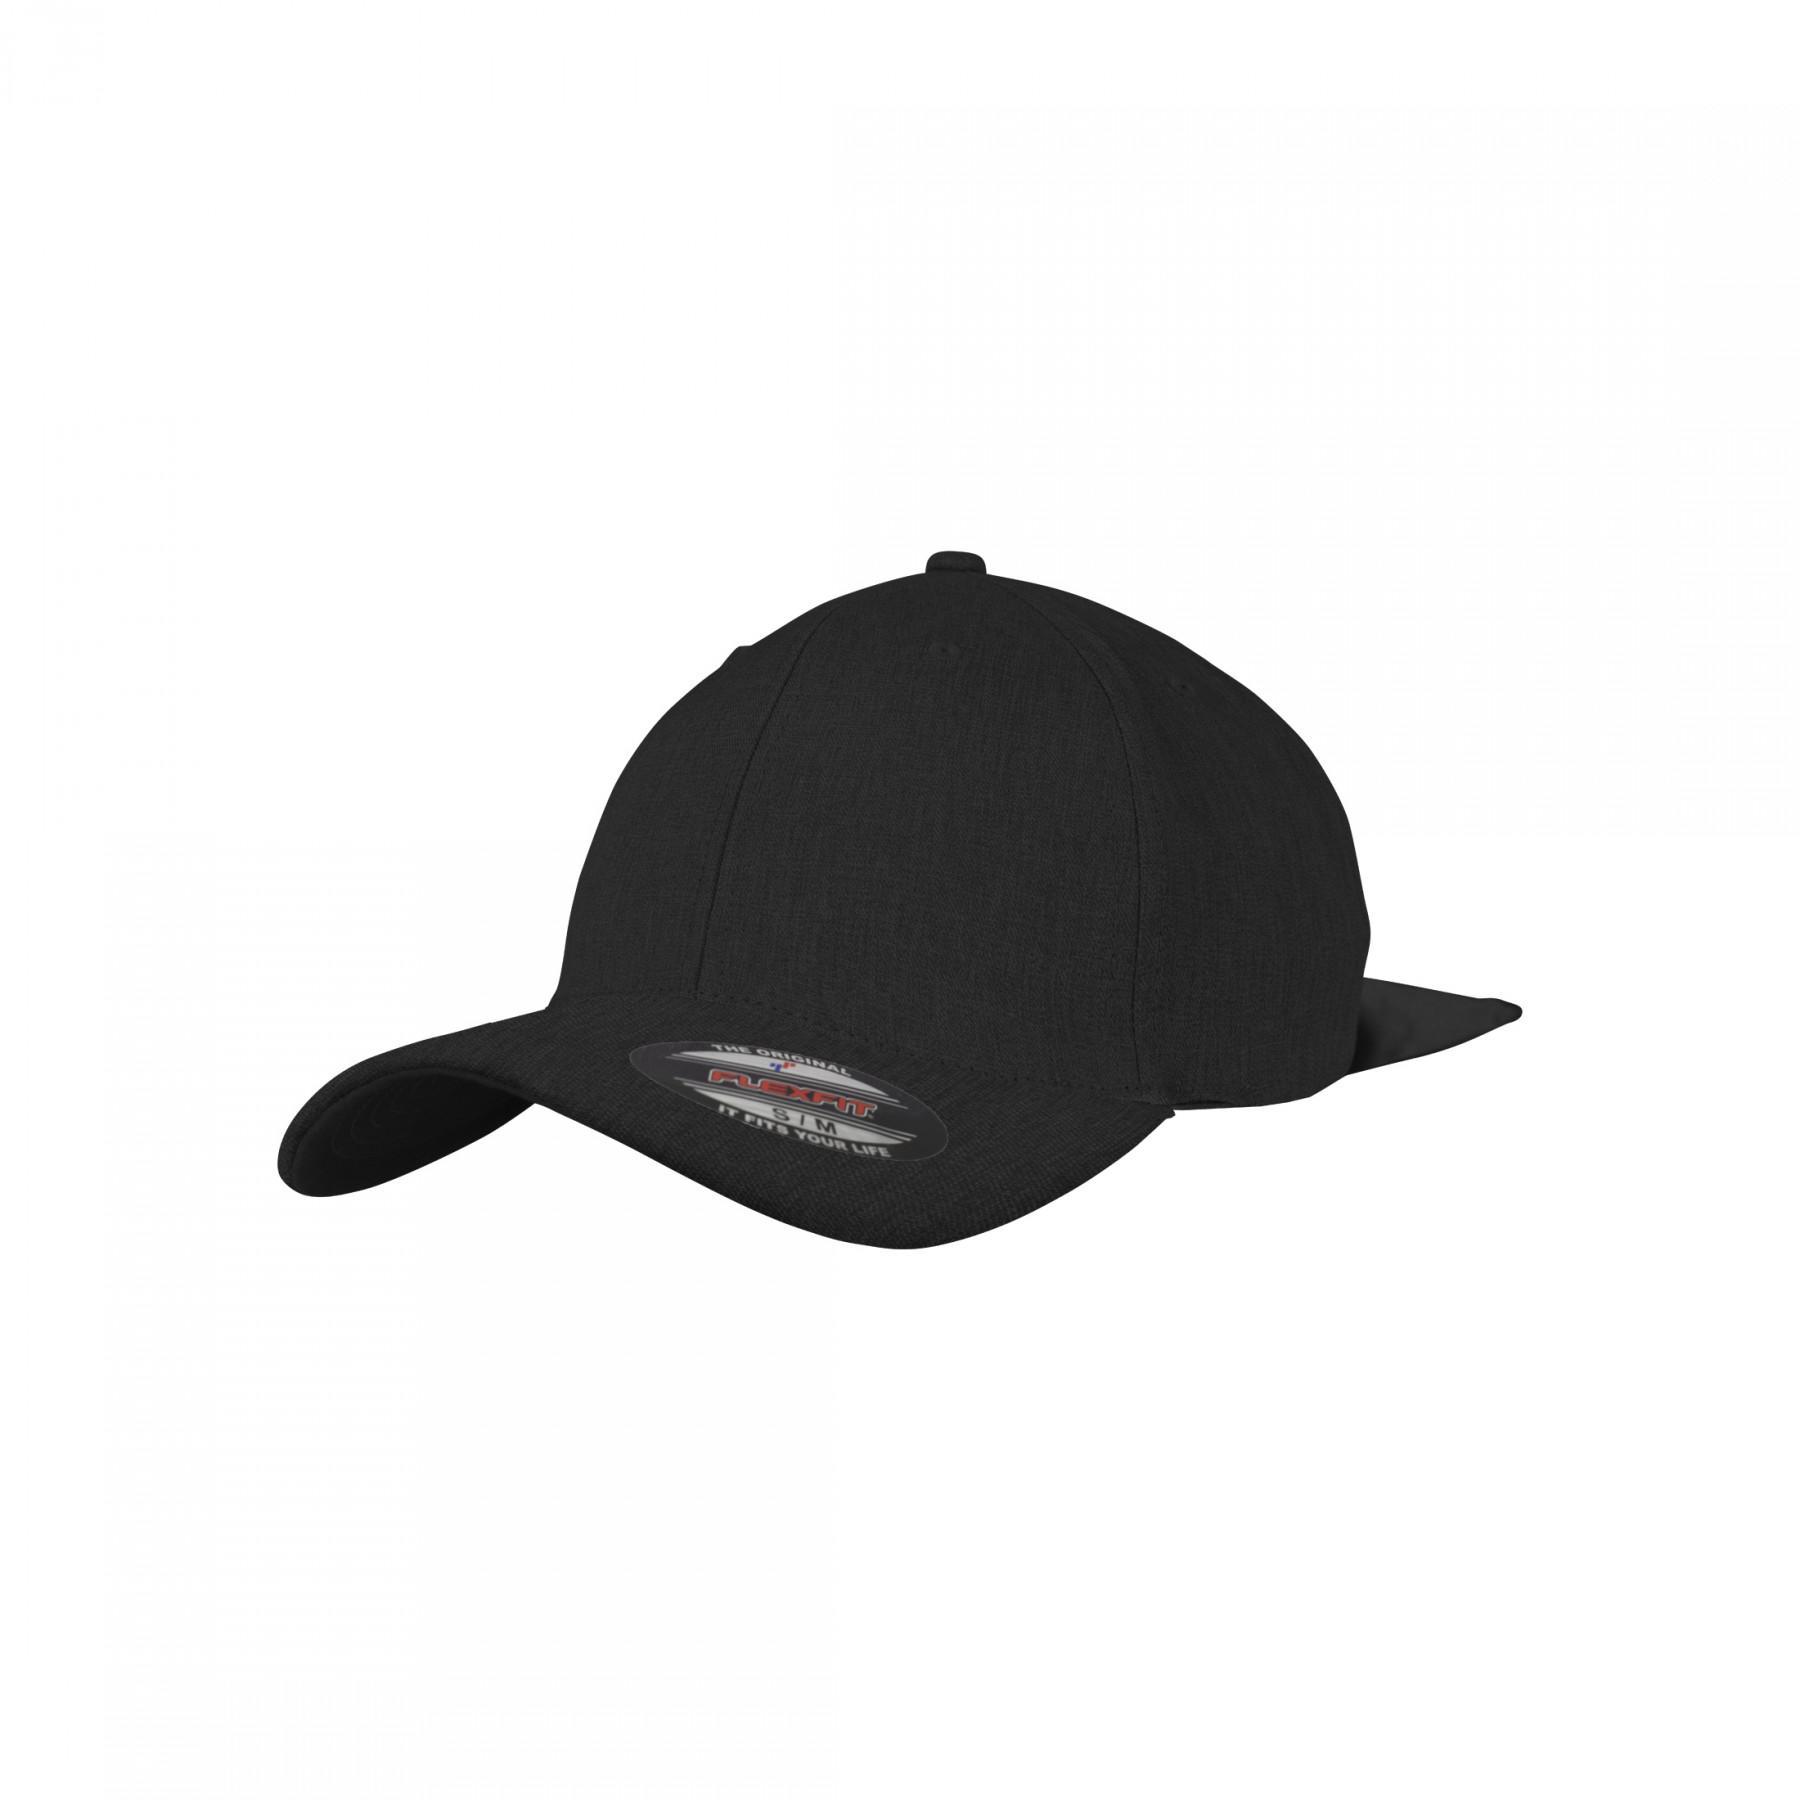 Cap Flexfit bow satin - Headwear caps - Baseball Accessories dad 